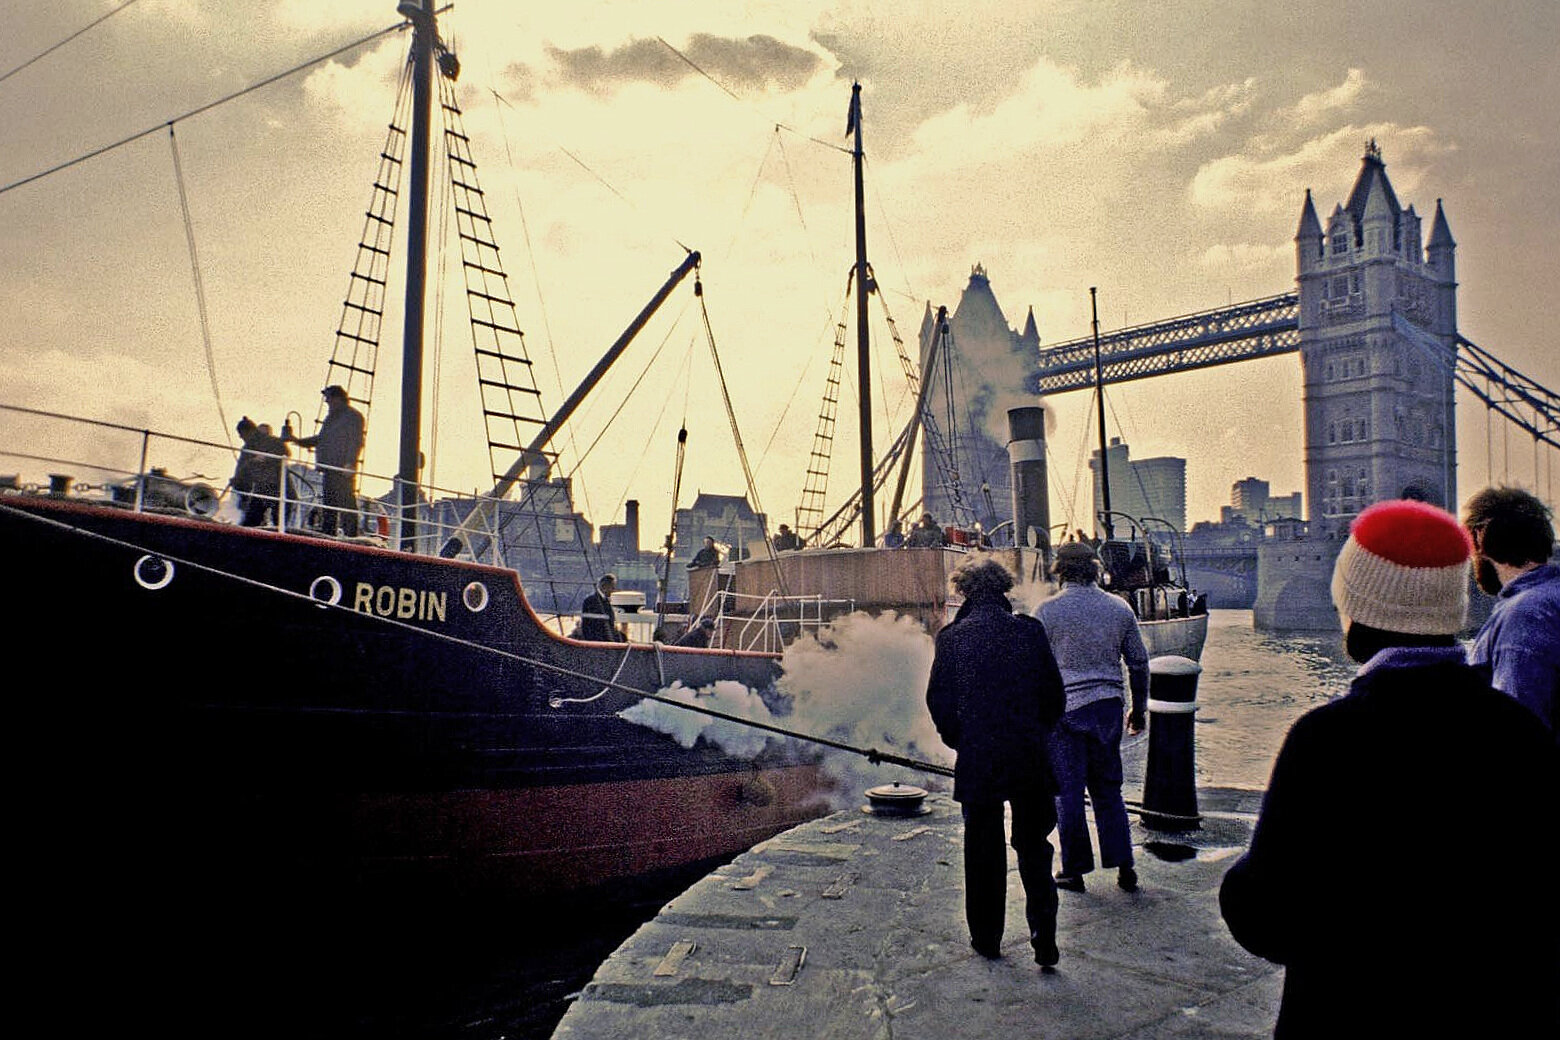 Arrival at St. Katherines Dock entrance 1980